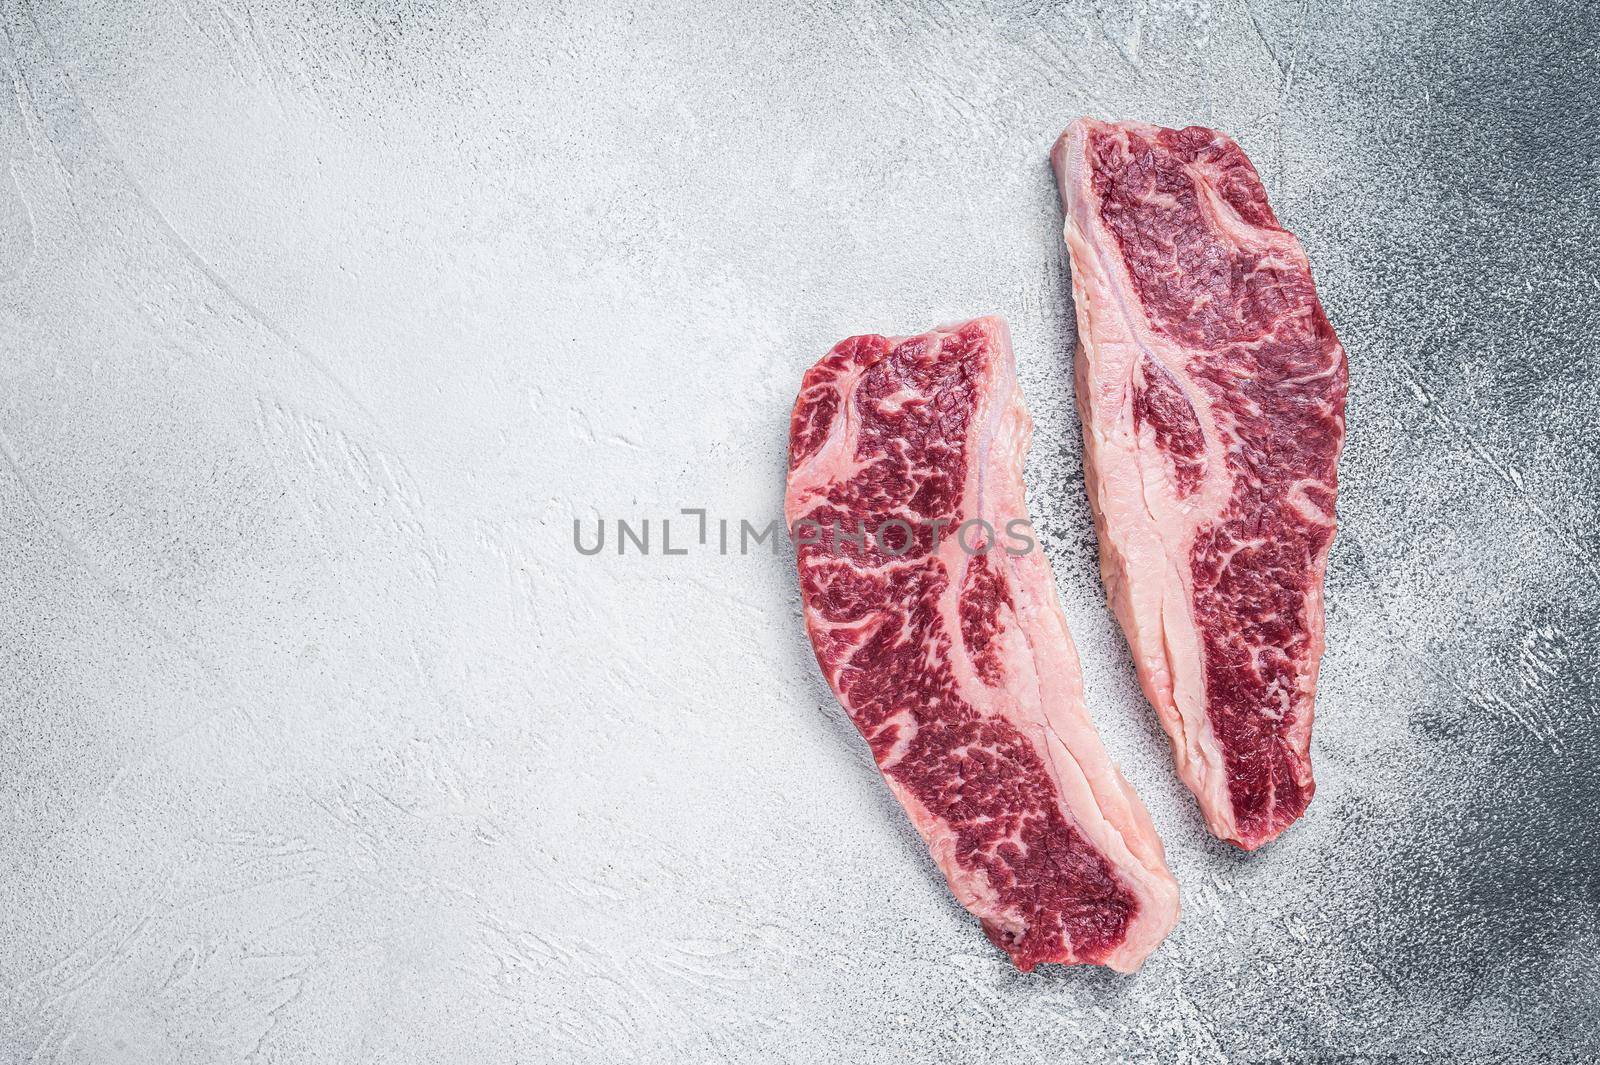 Striploin steak or New York steak, raw beef butchery meat cut. White background. Top view. Copy space.